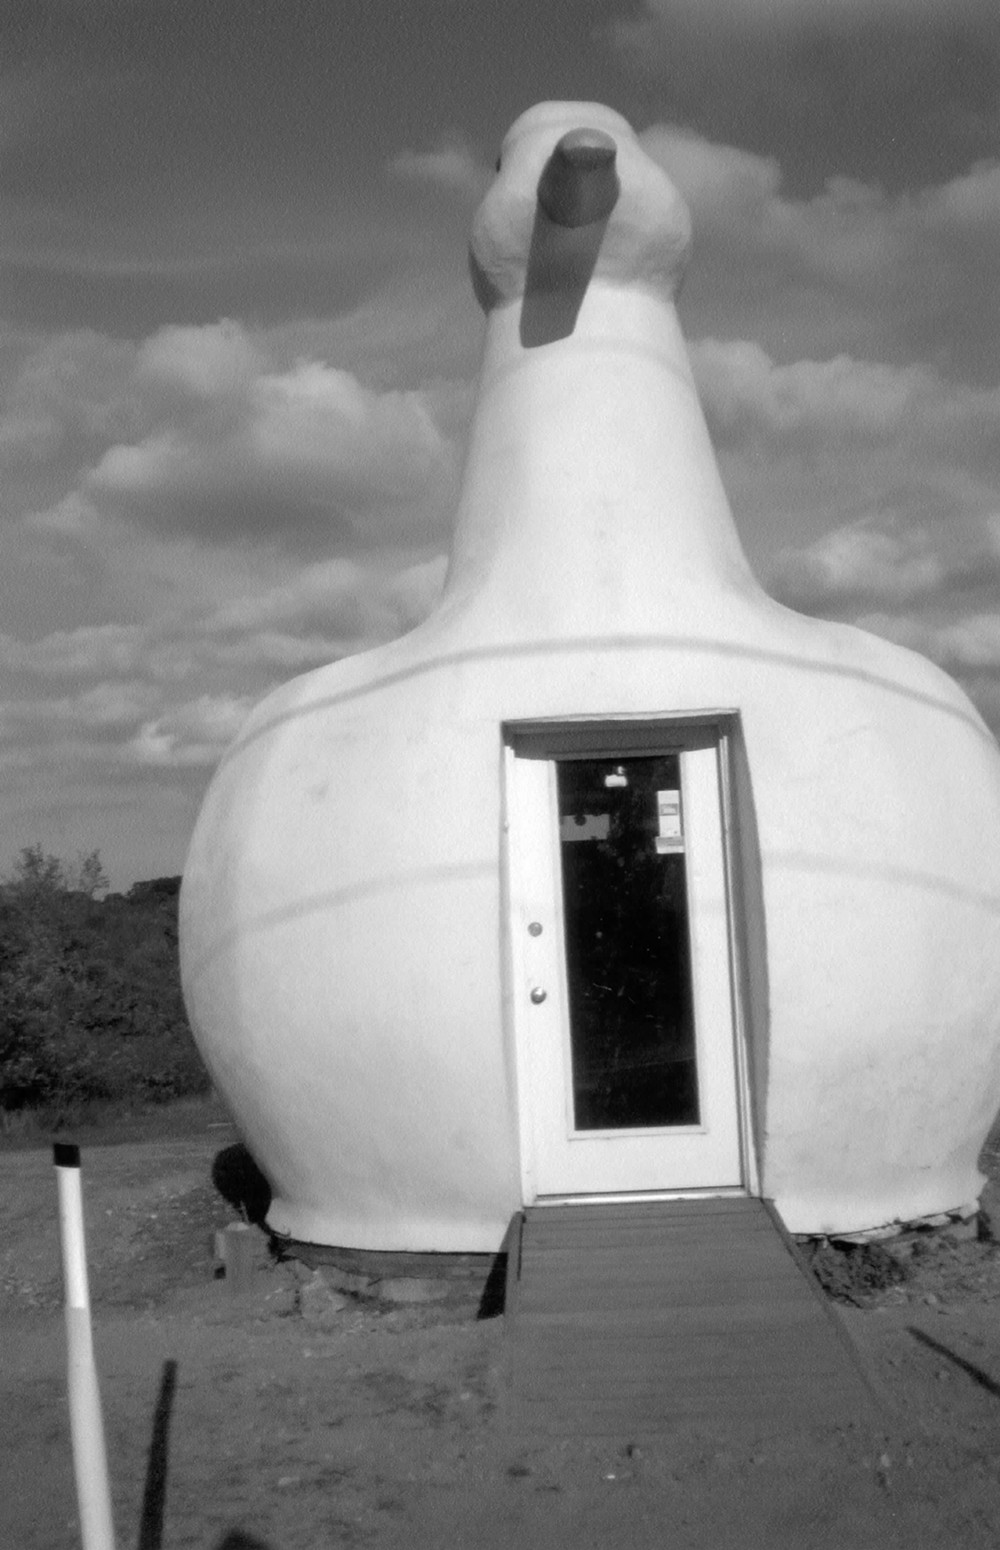 The Big Duck, Southampton New York Entrance to Big Duck (2007)